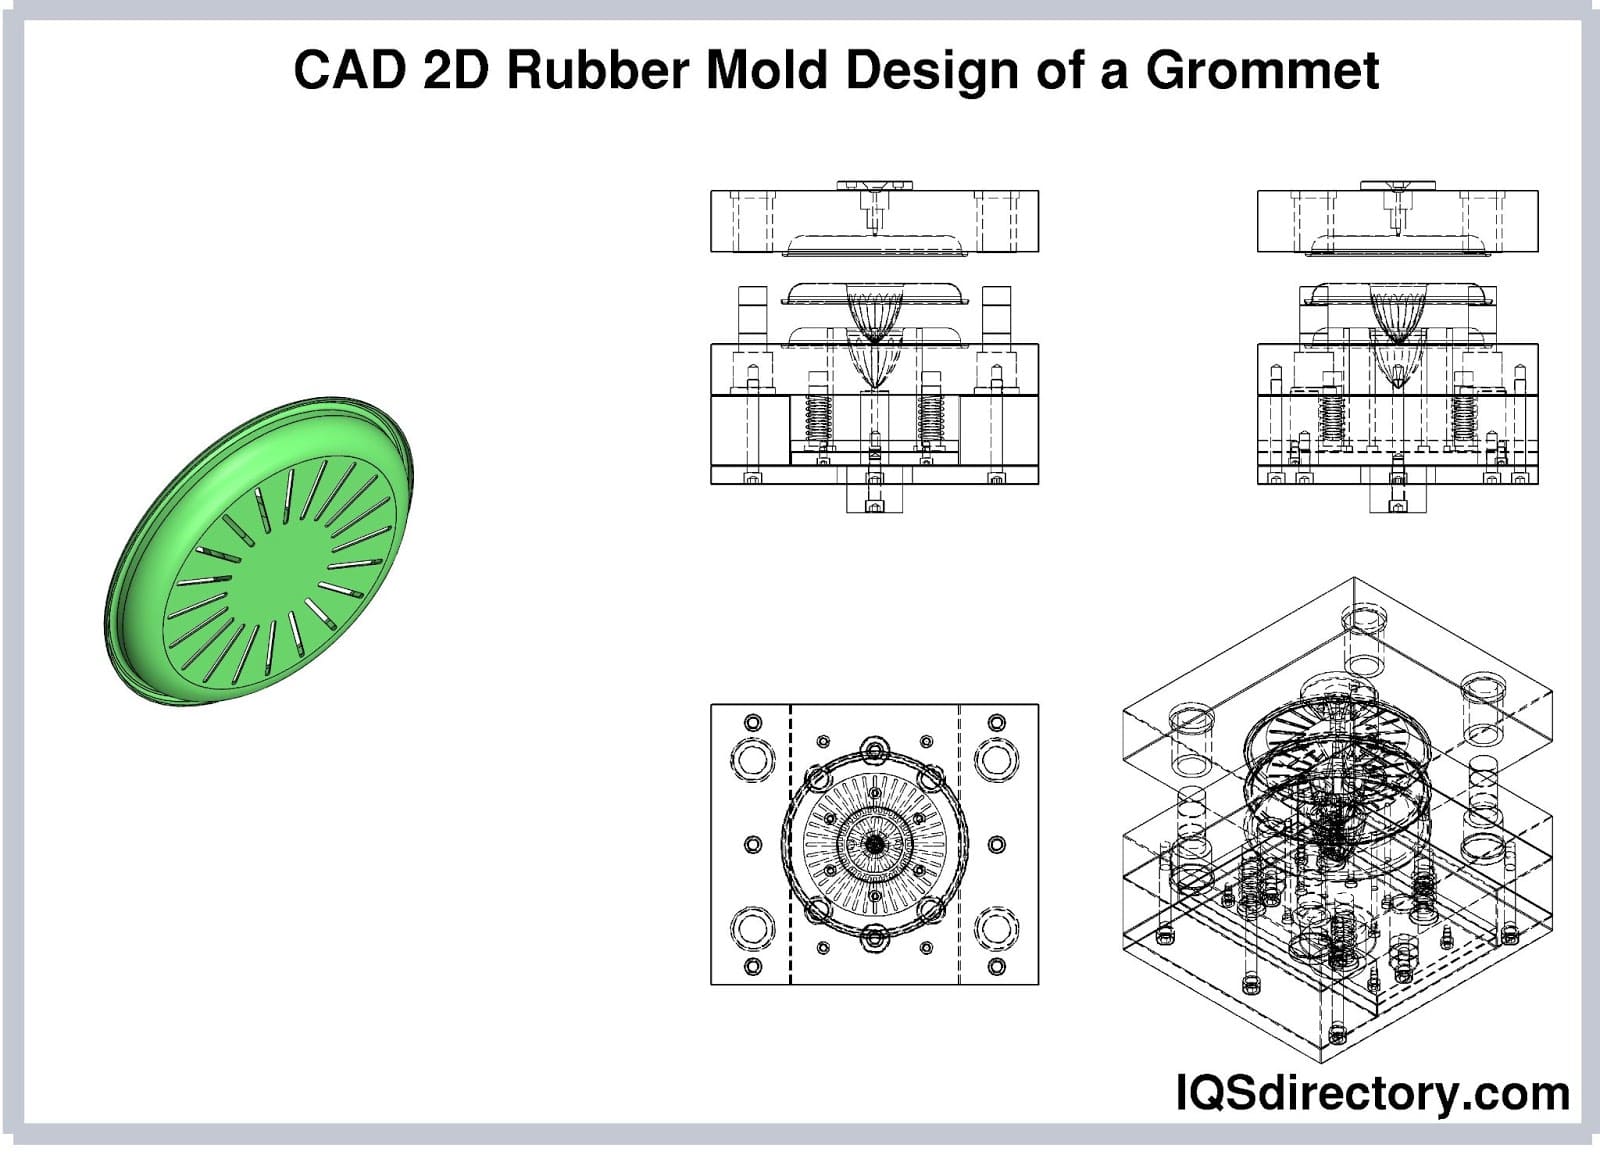 https://www.iqsdirectory.com/articles/rubber/rubber-molding/cad-2d-rubber-mold-design-of-a-grommet.jpg